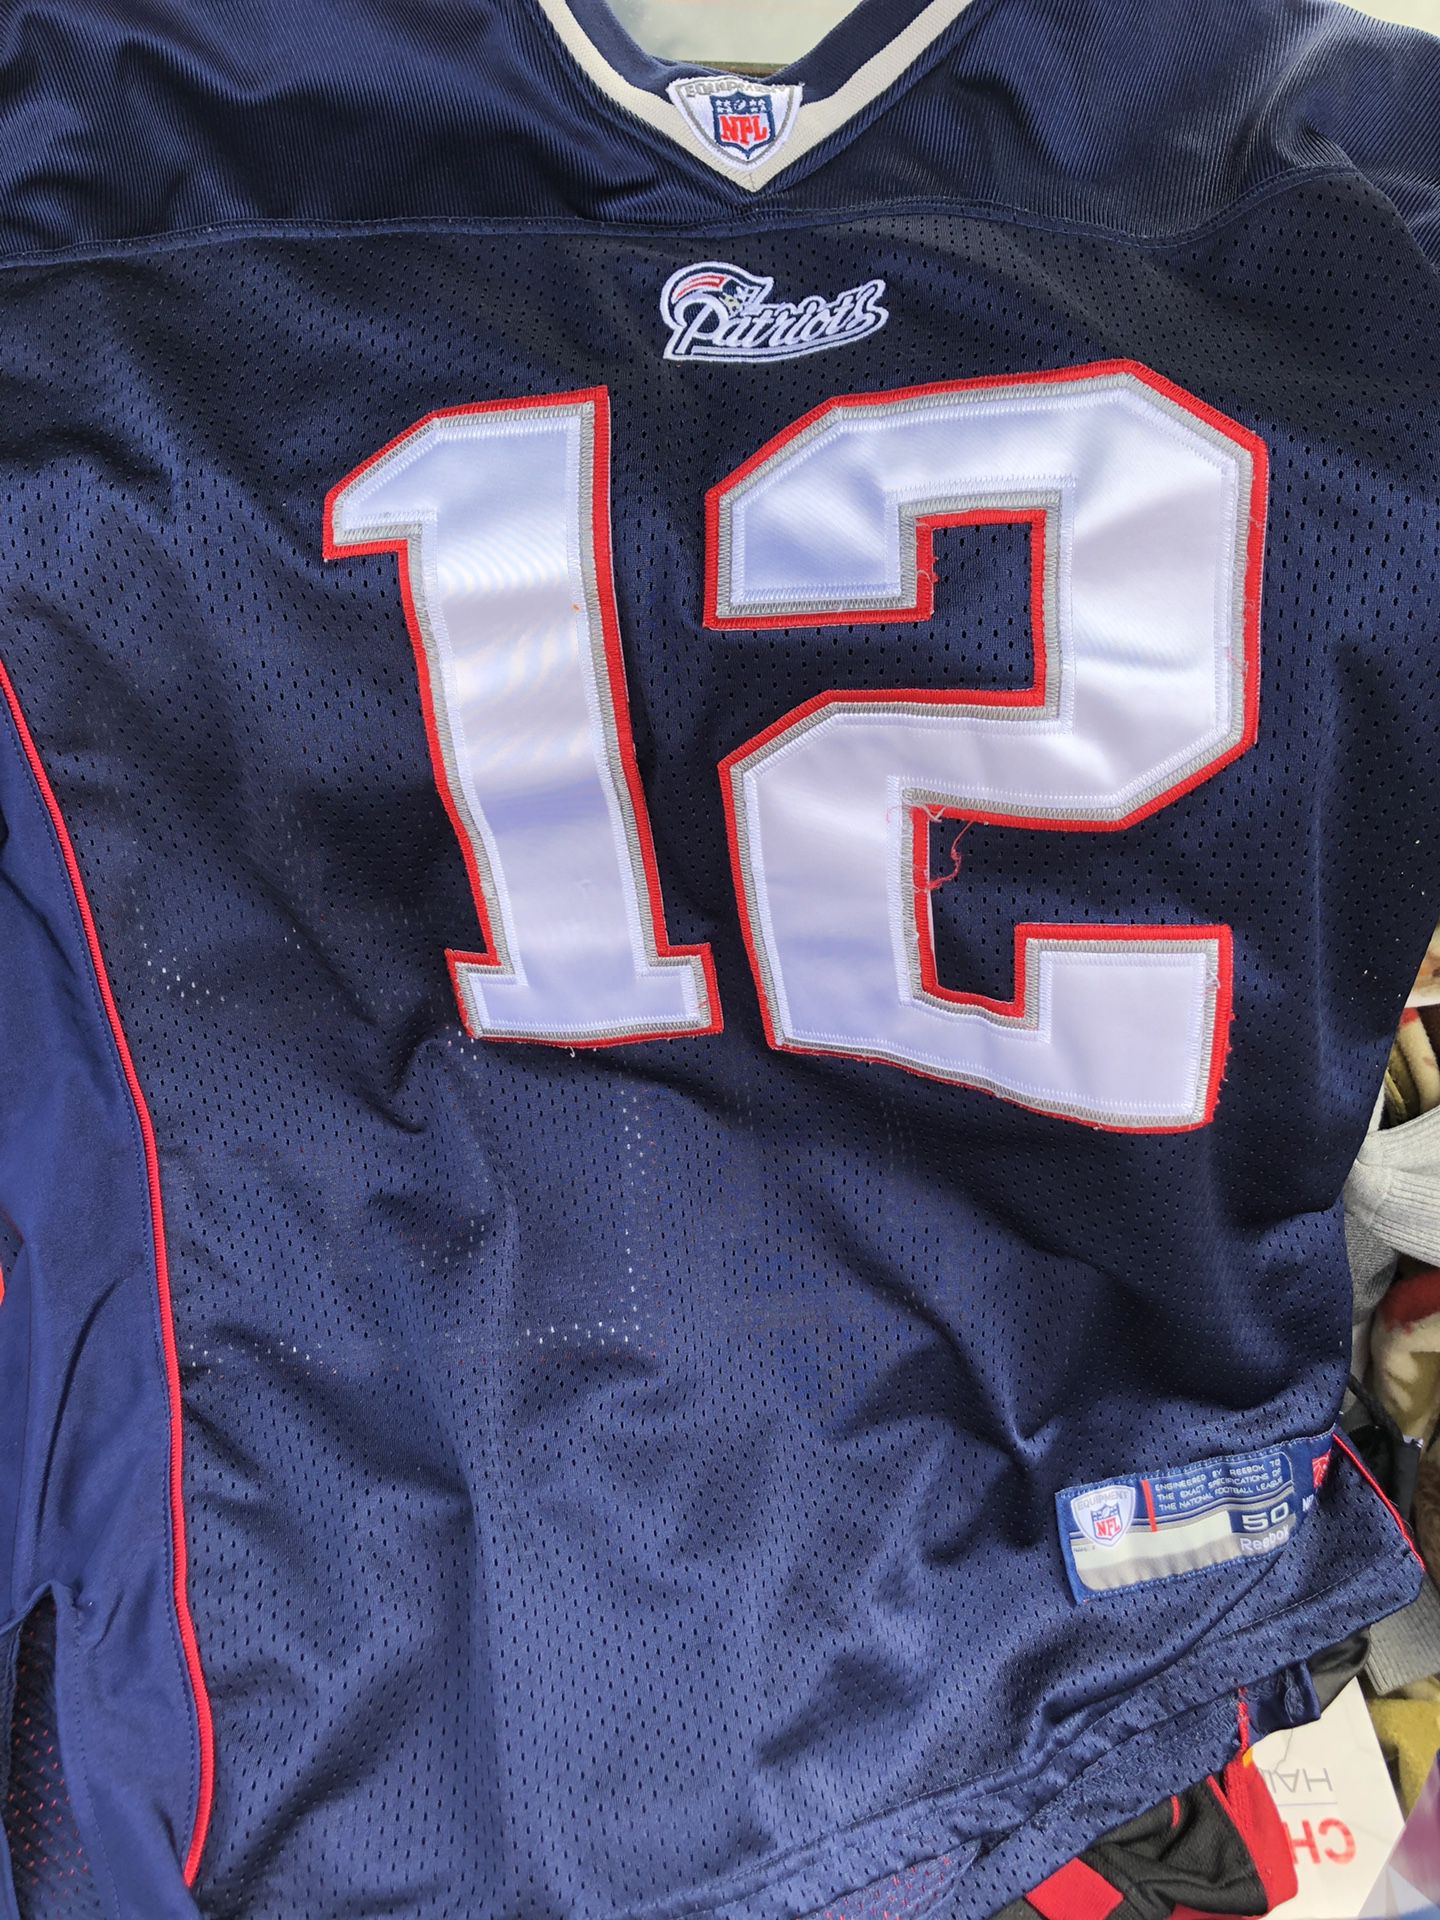 Tom Brady Patriots jersey